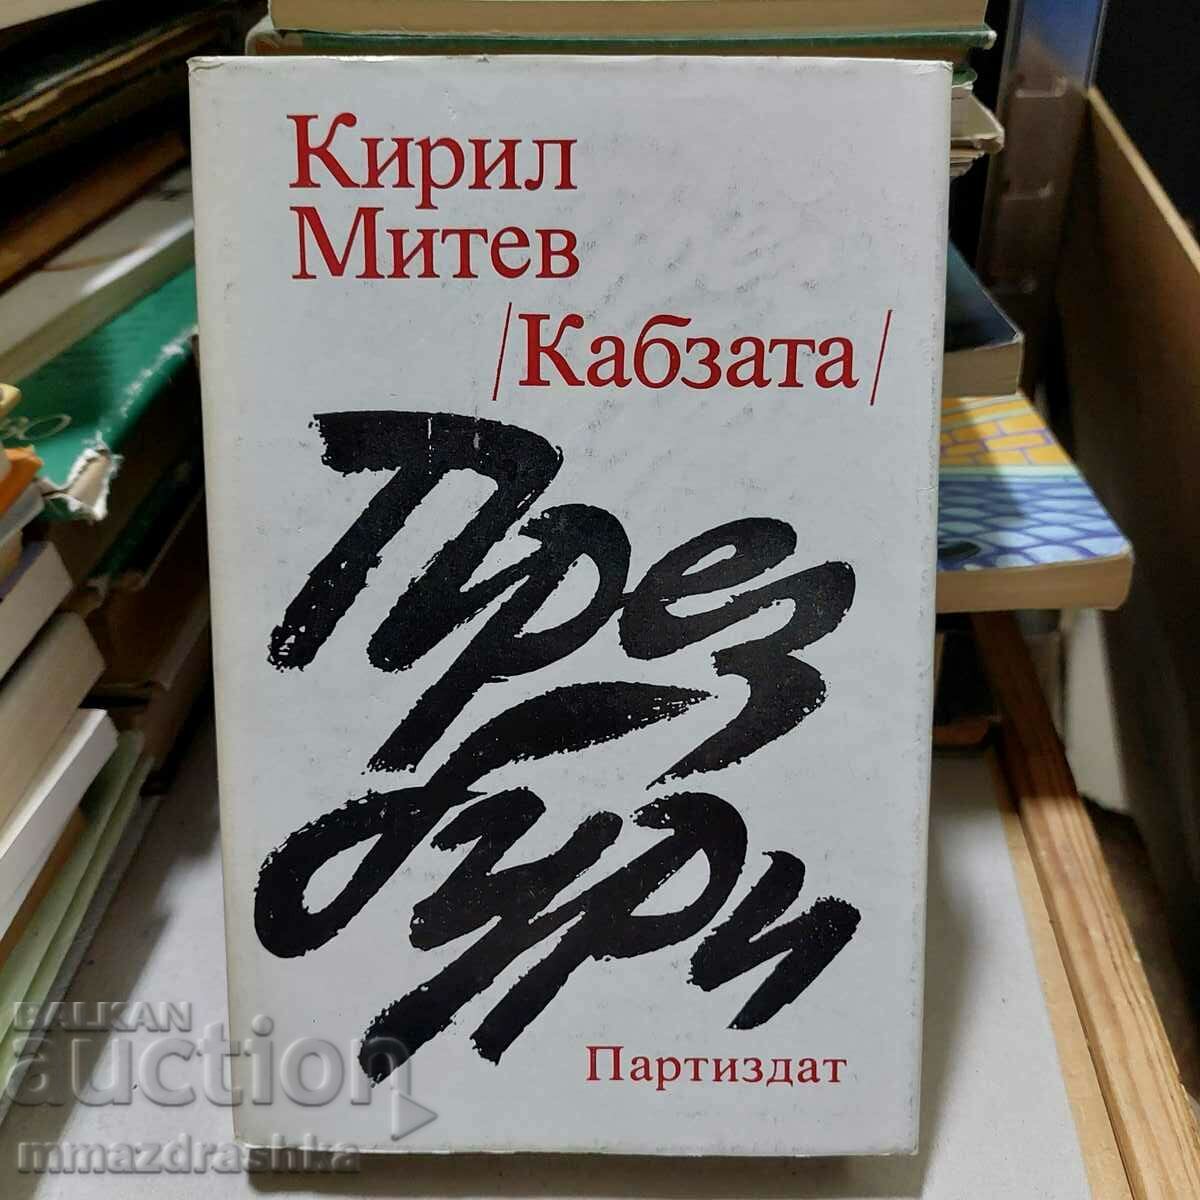 Autographed! Through storms, Kiril Mitev (Kabzata)